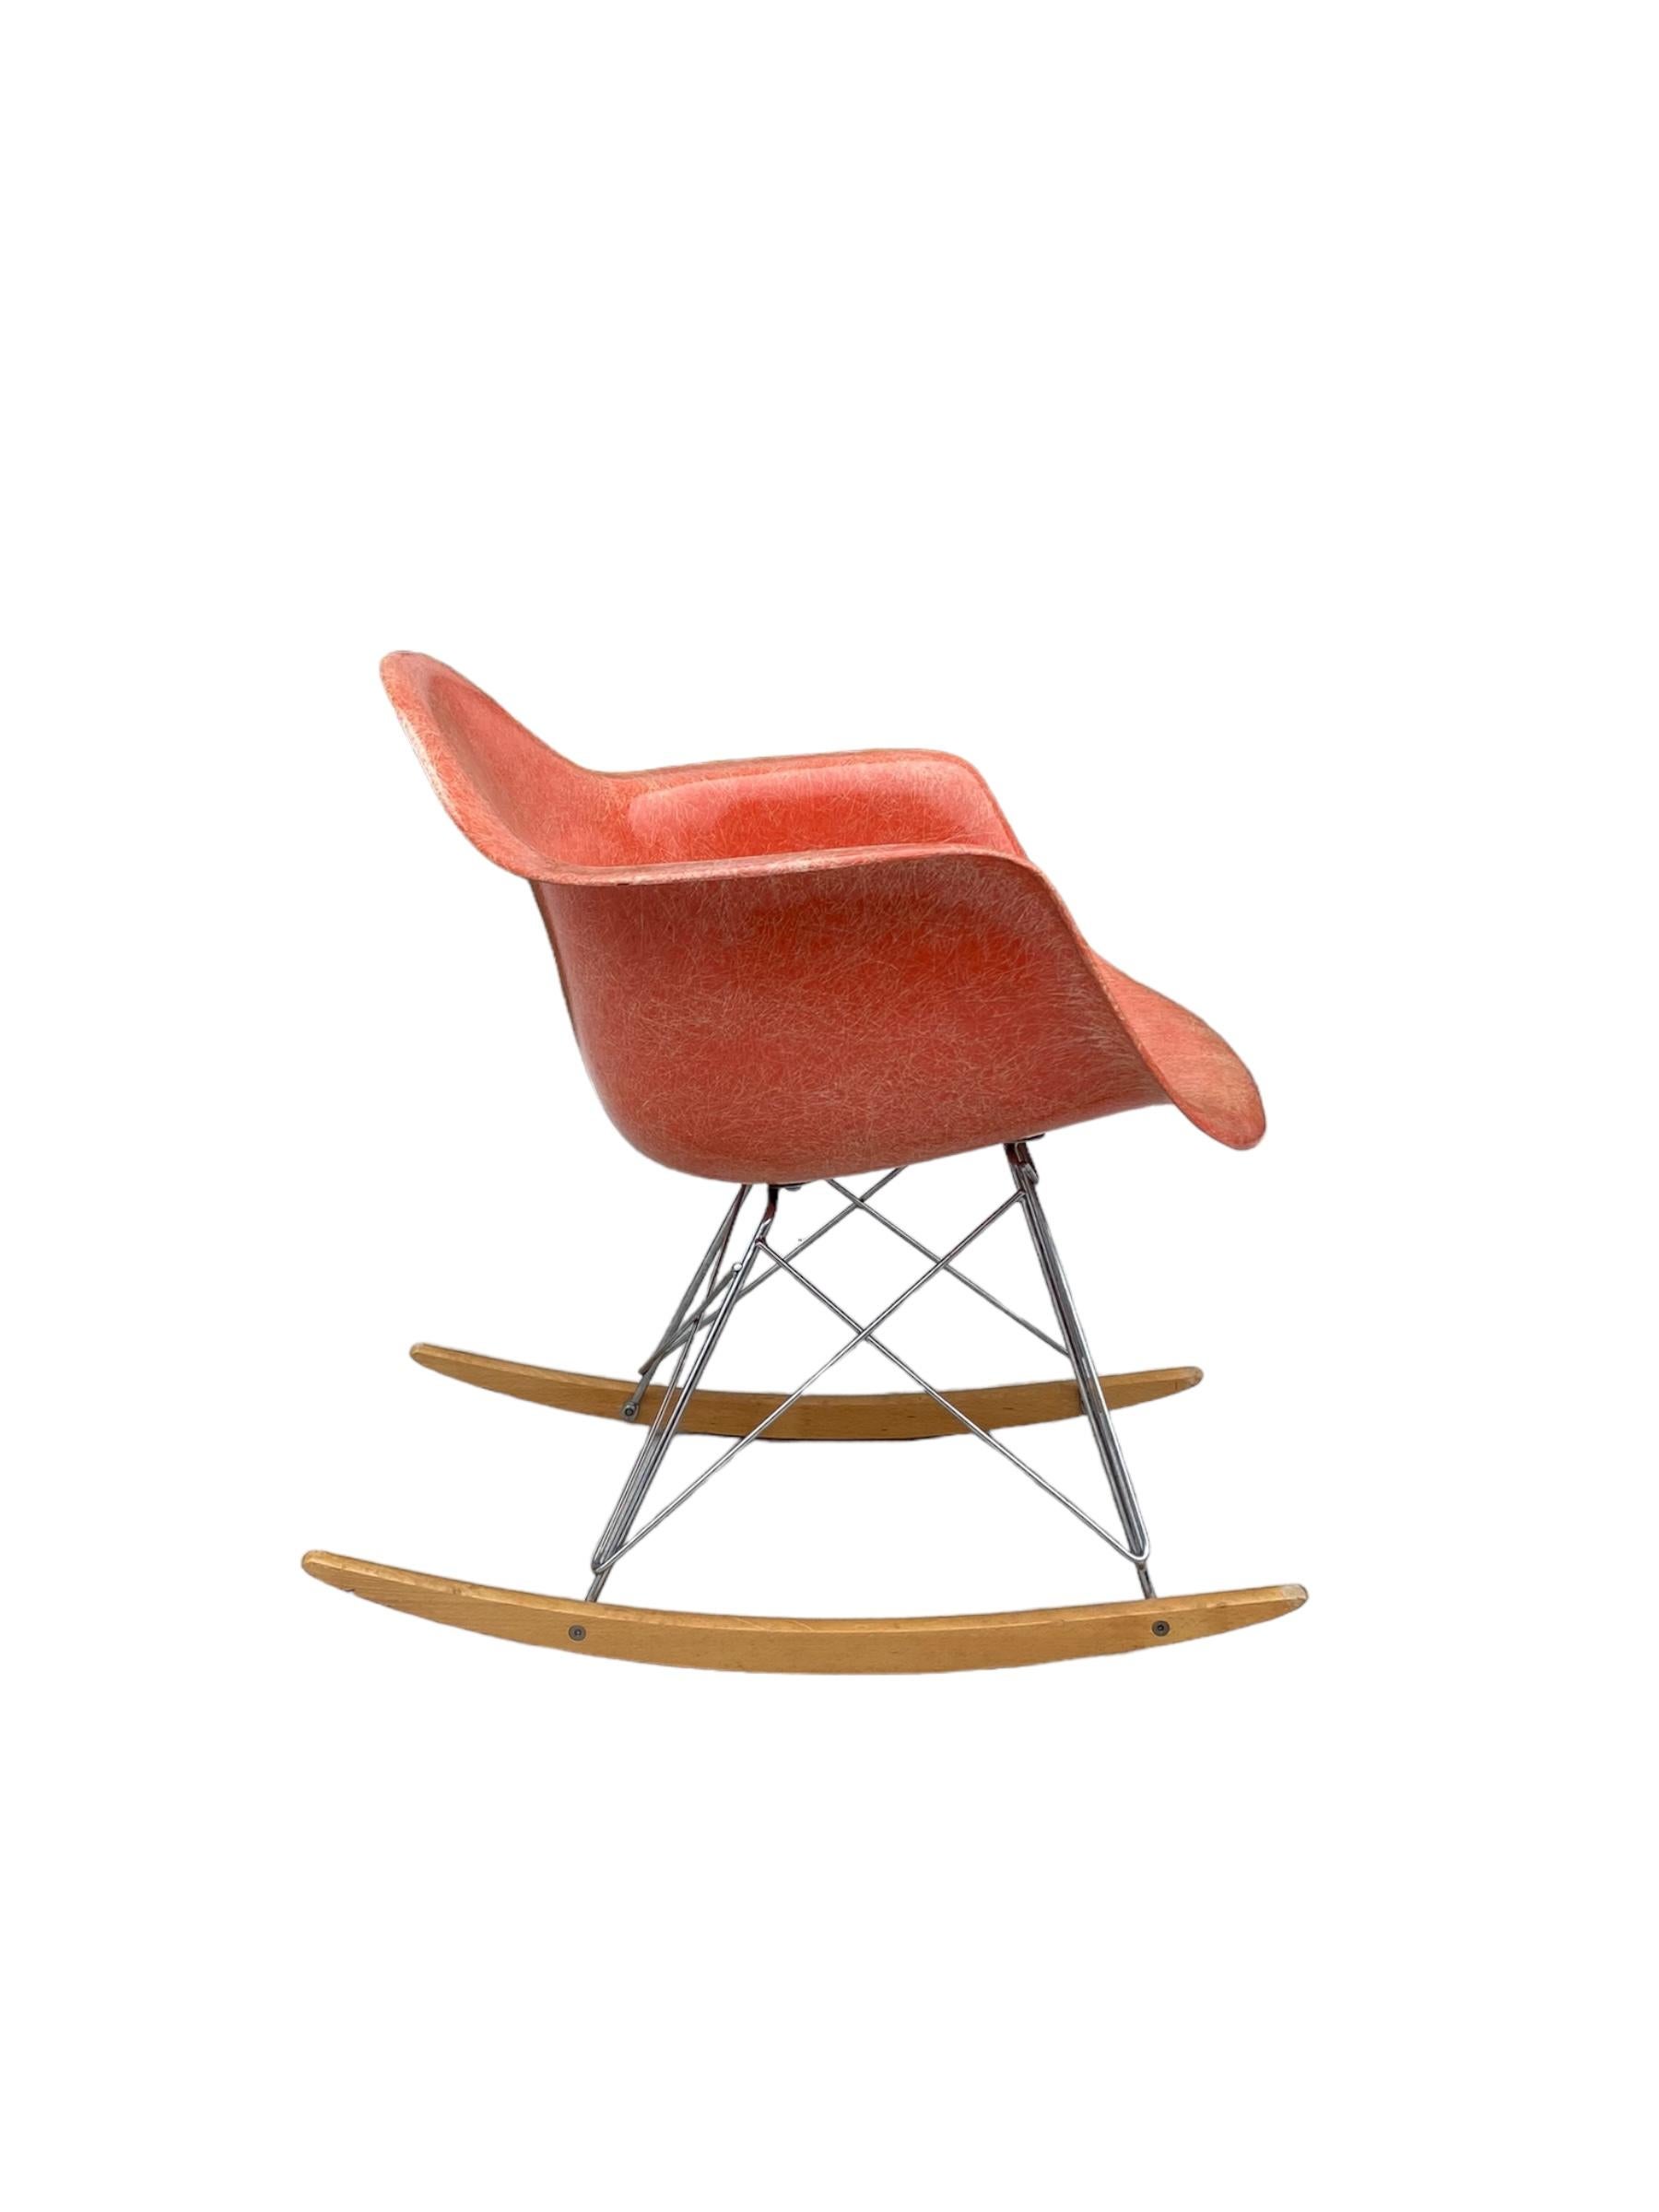 20th Century Herman Miller Eames RAR Rocking Chair in Red Orange For Sale